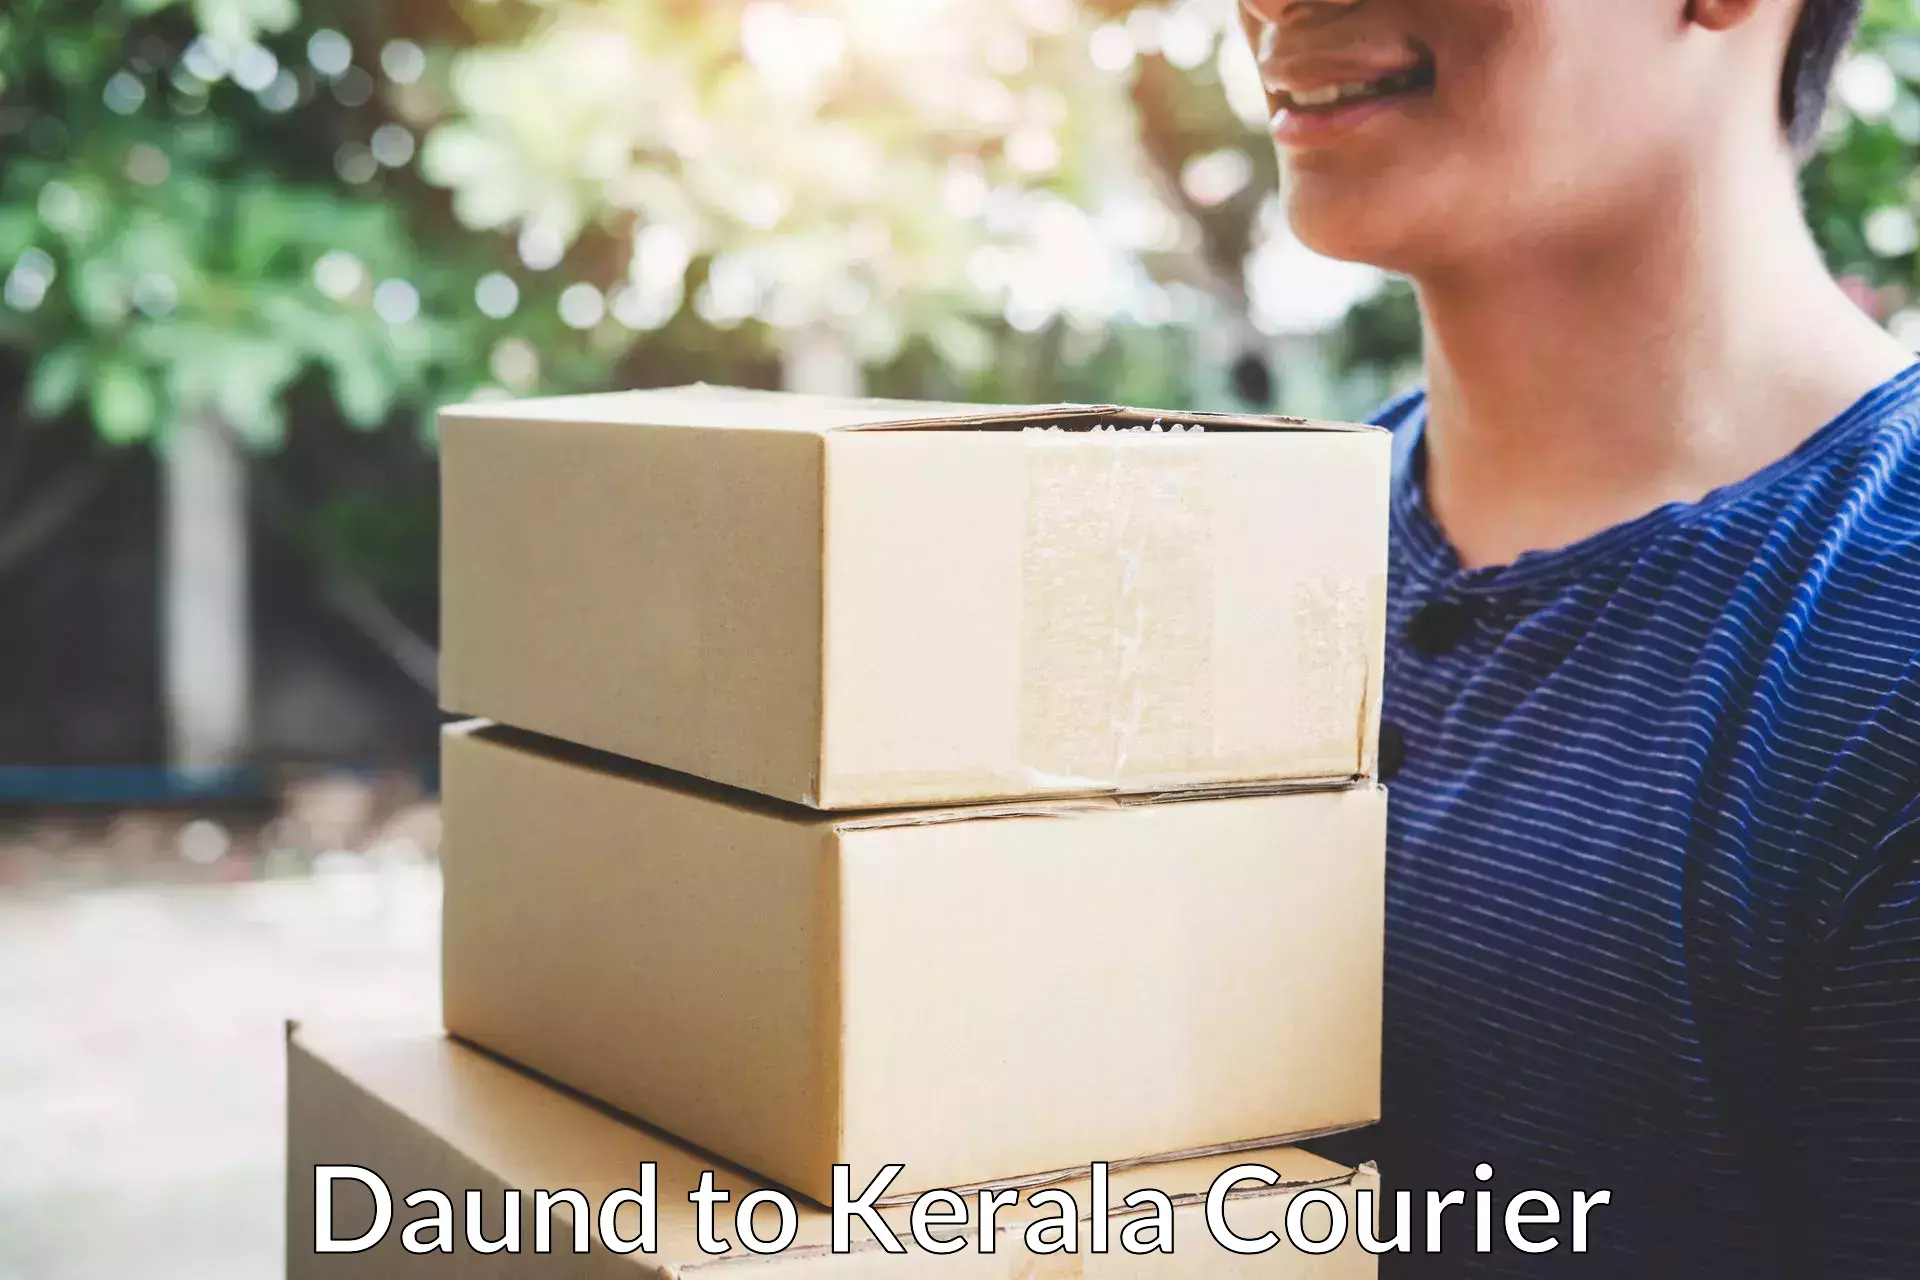 Furniture transport company Daund to Kerala